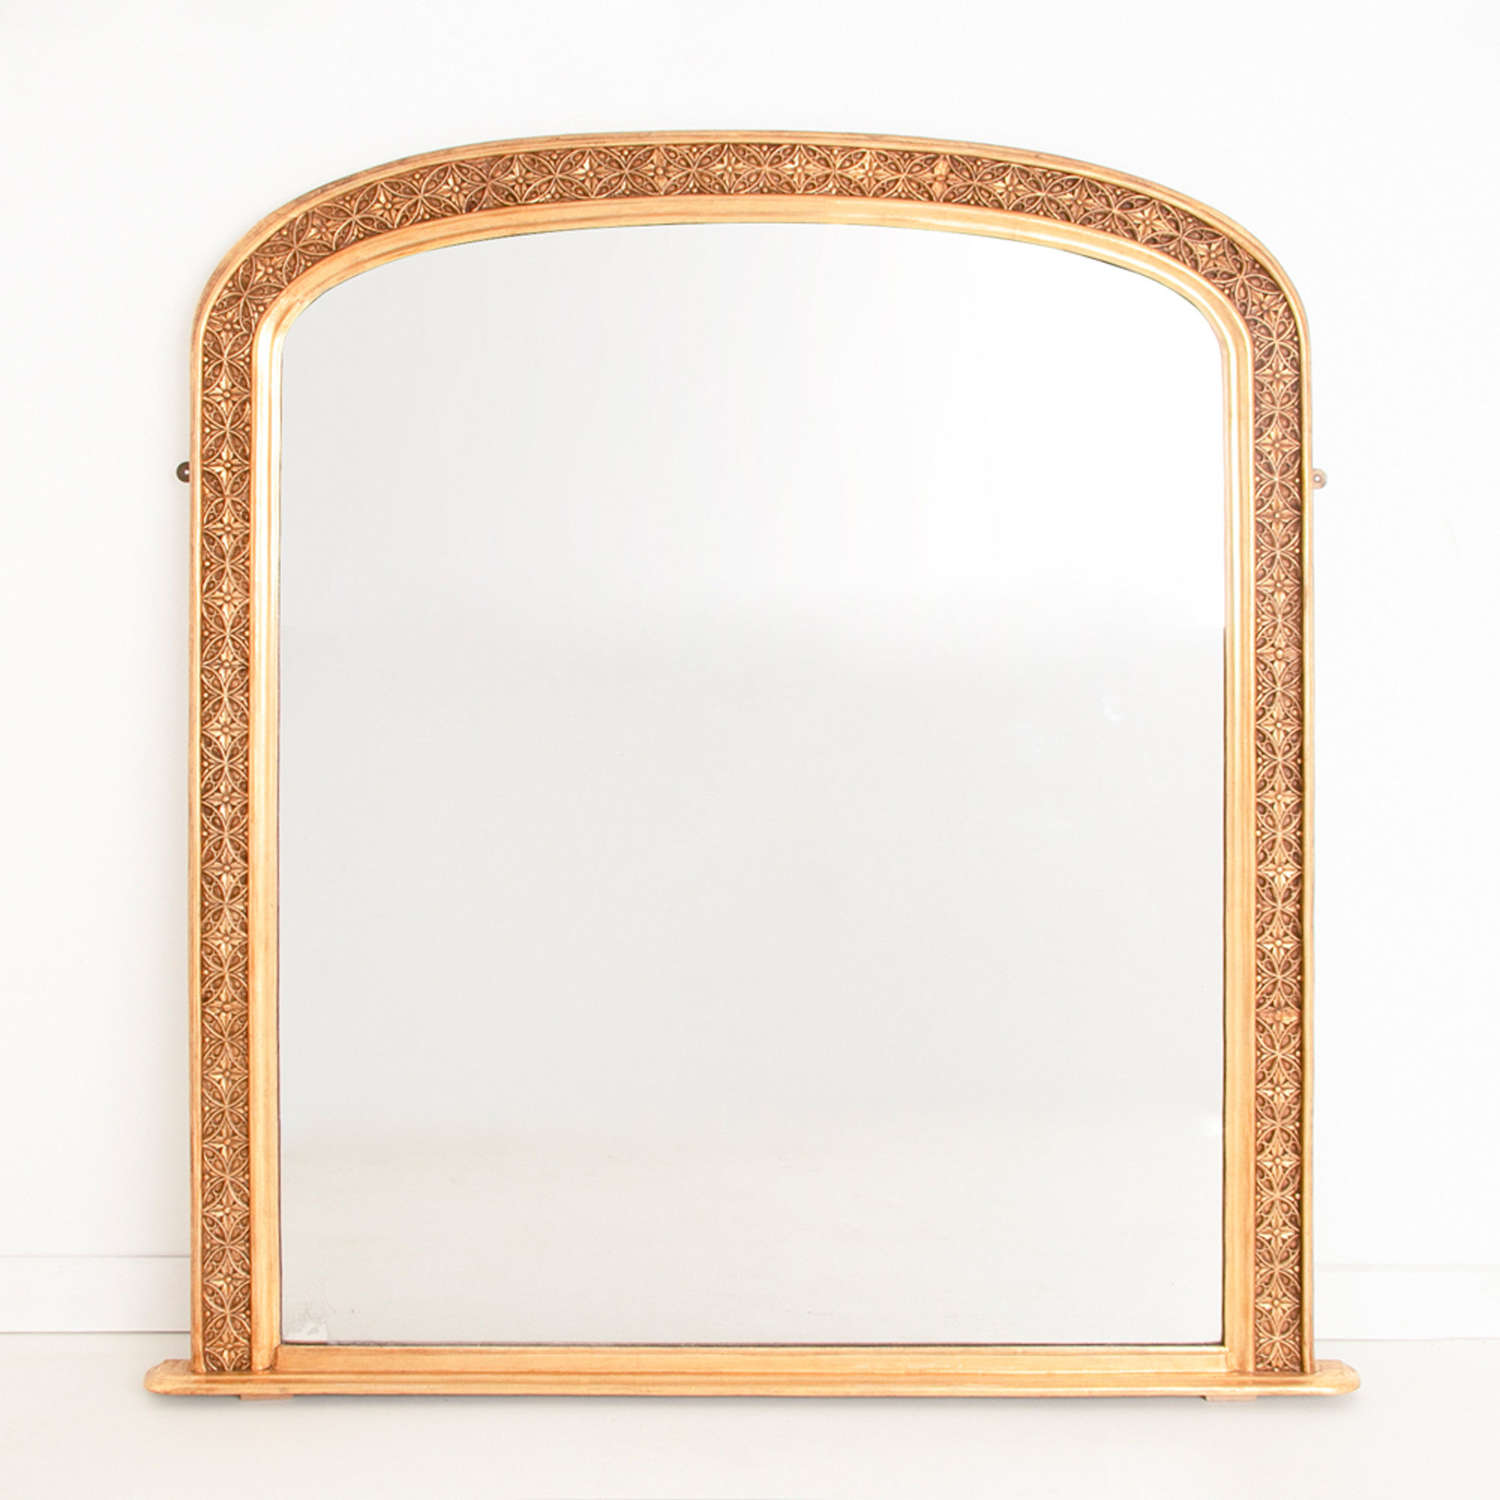 Antique Gilded Overmantle Mirror c.1840